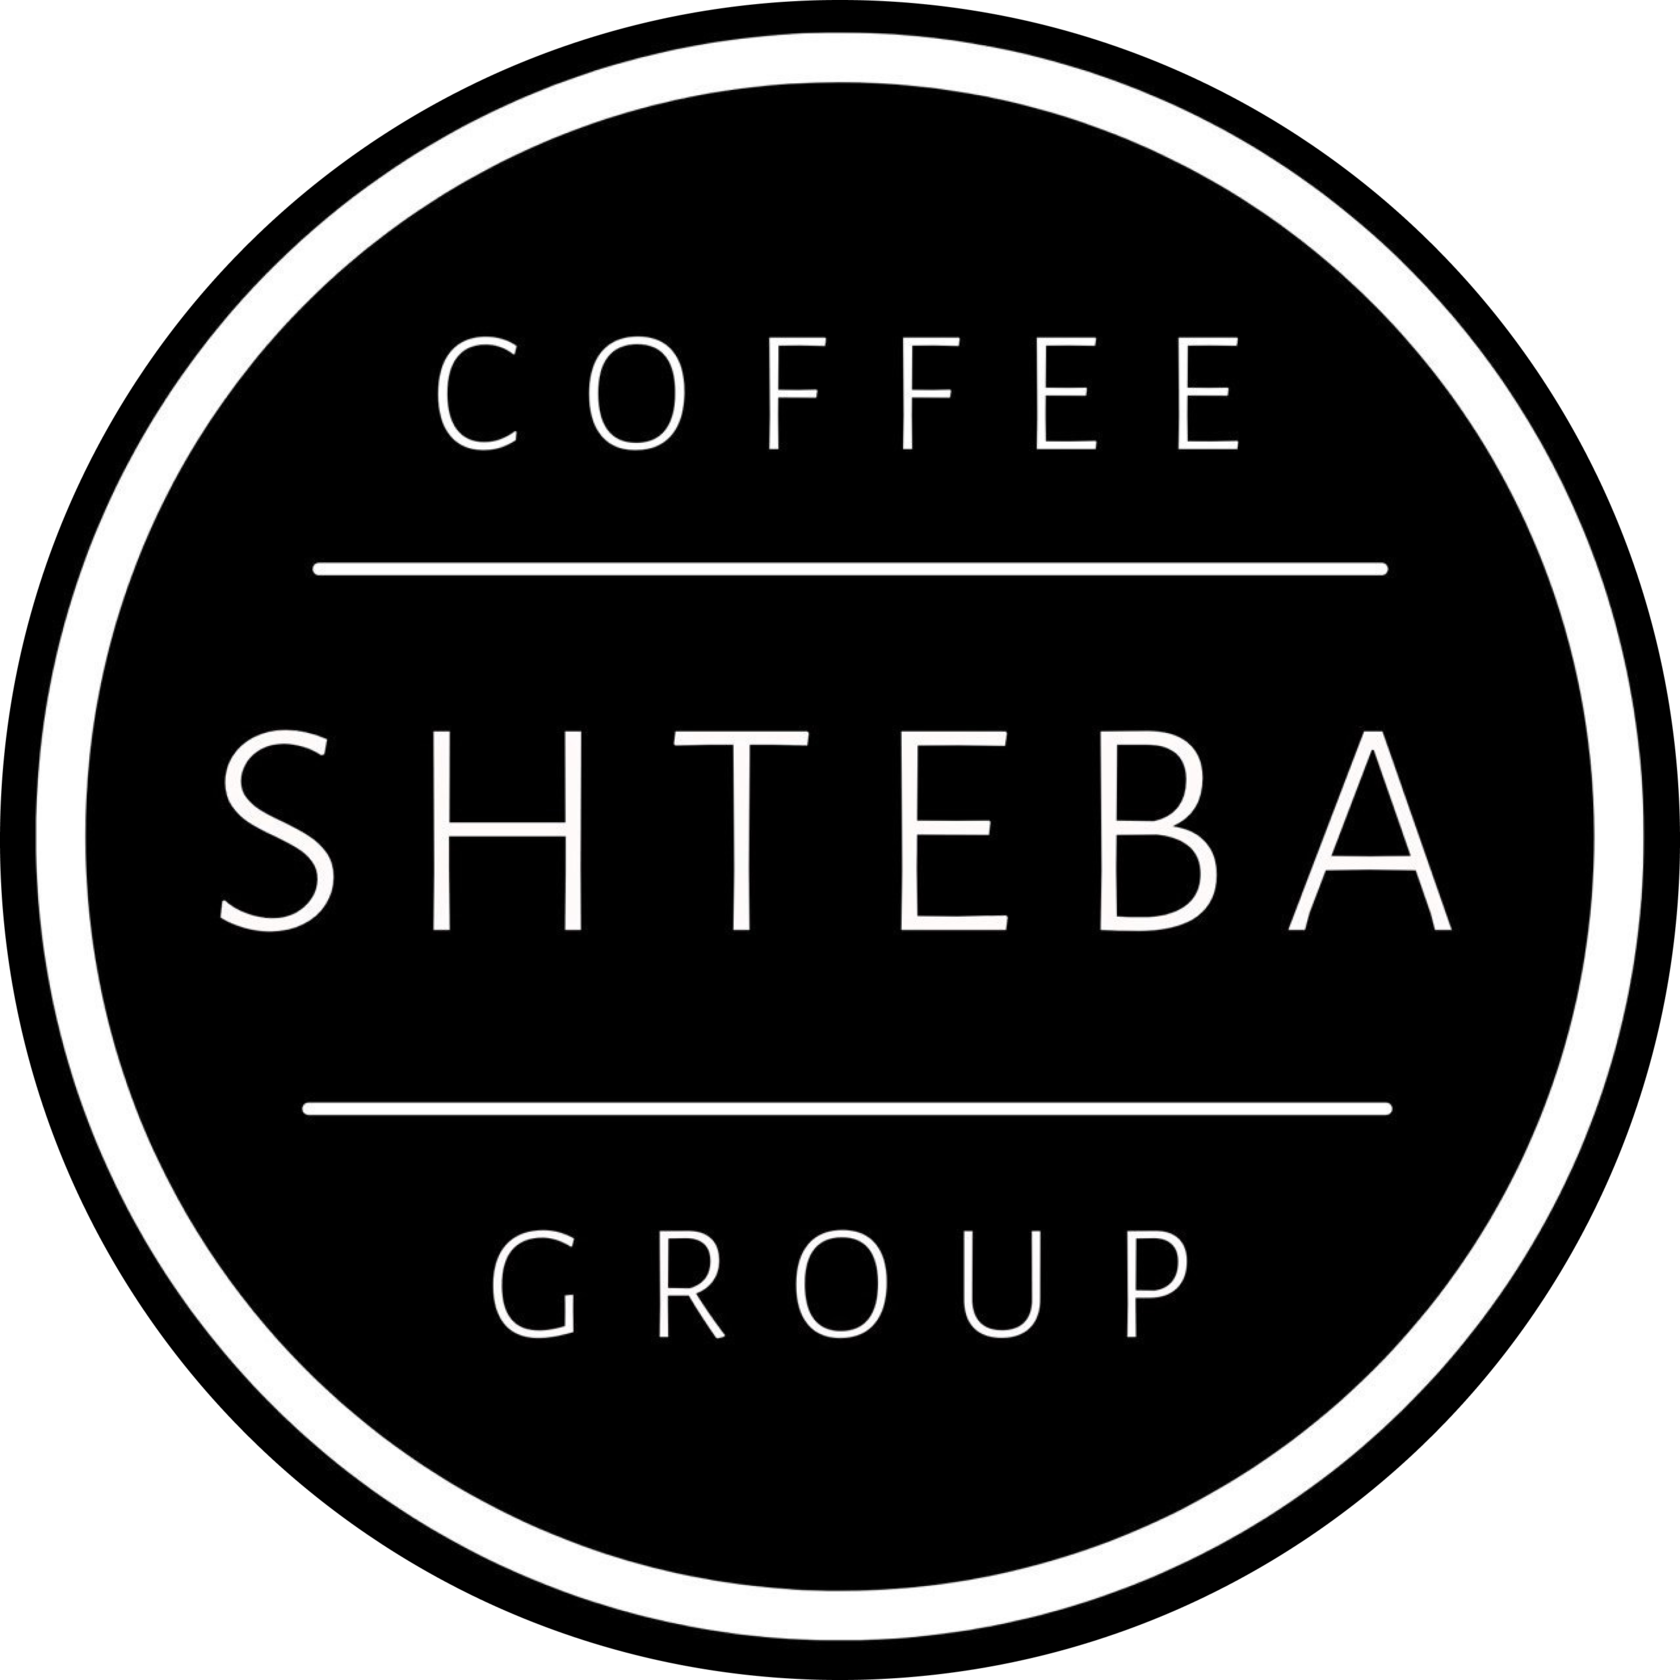 COFFEE SHTEBA GROUP